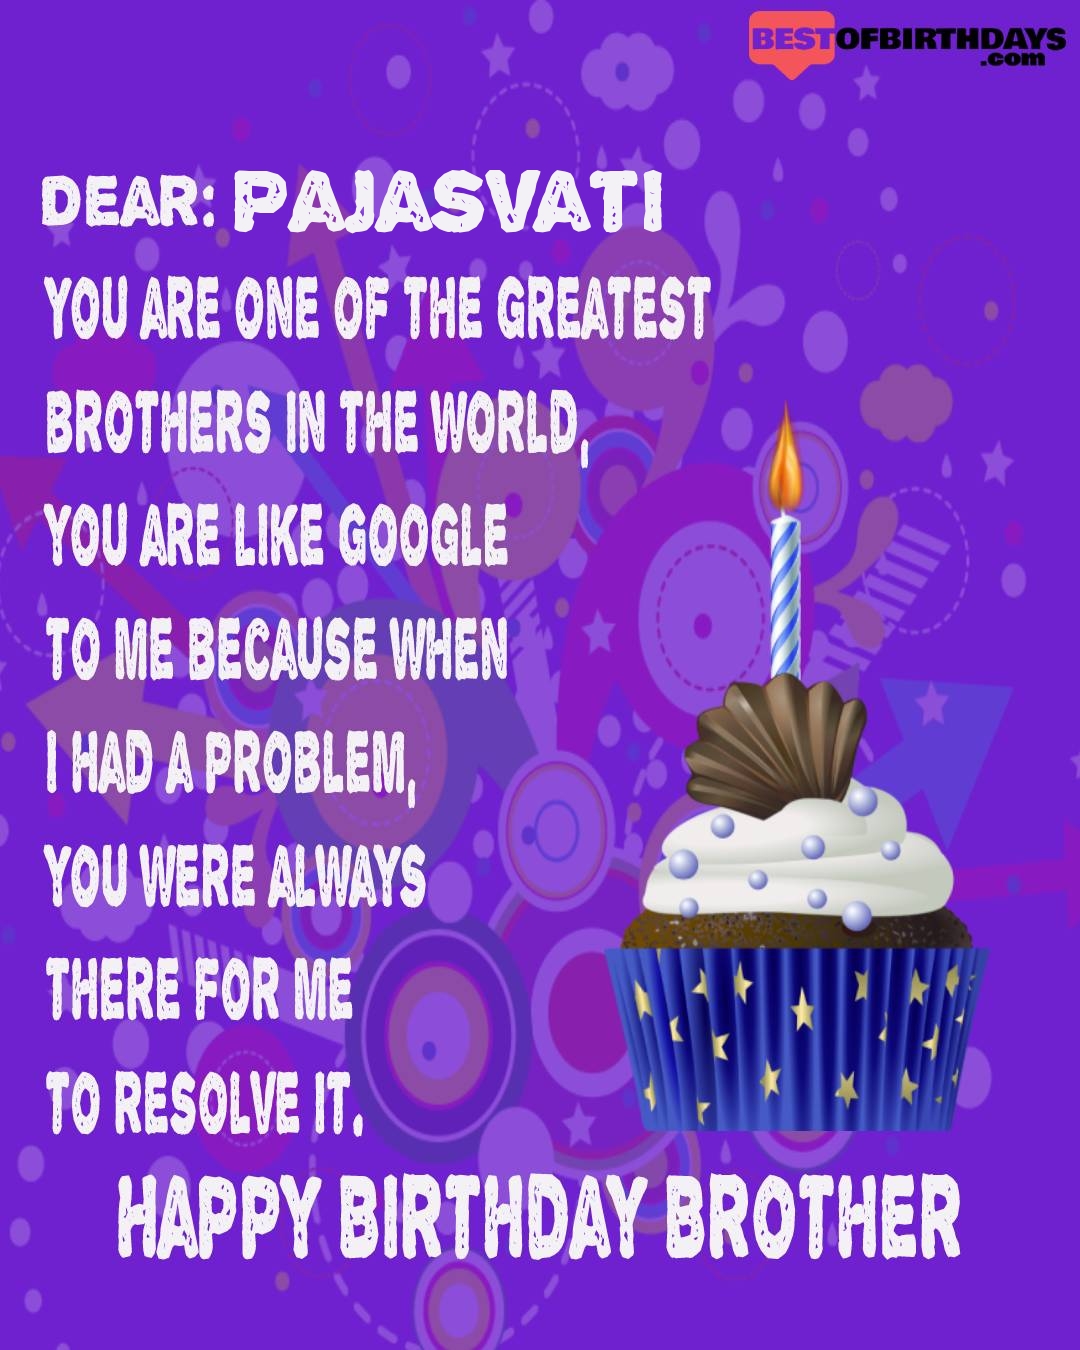 Happy birthday pajasvati bhai brother bro